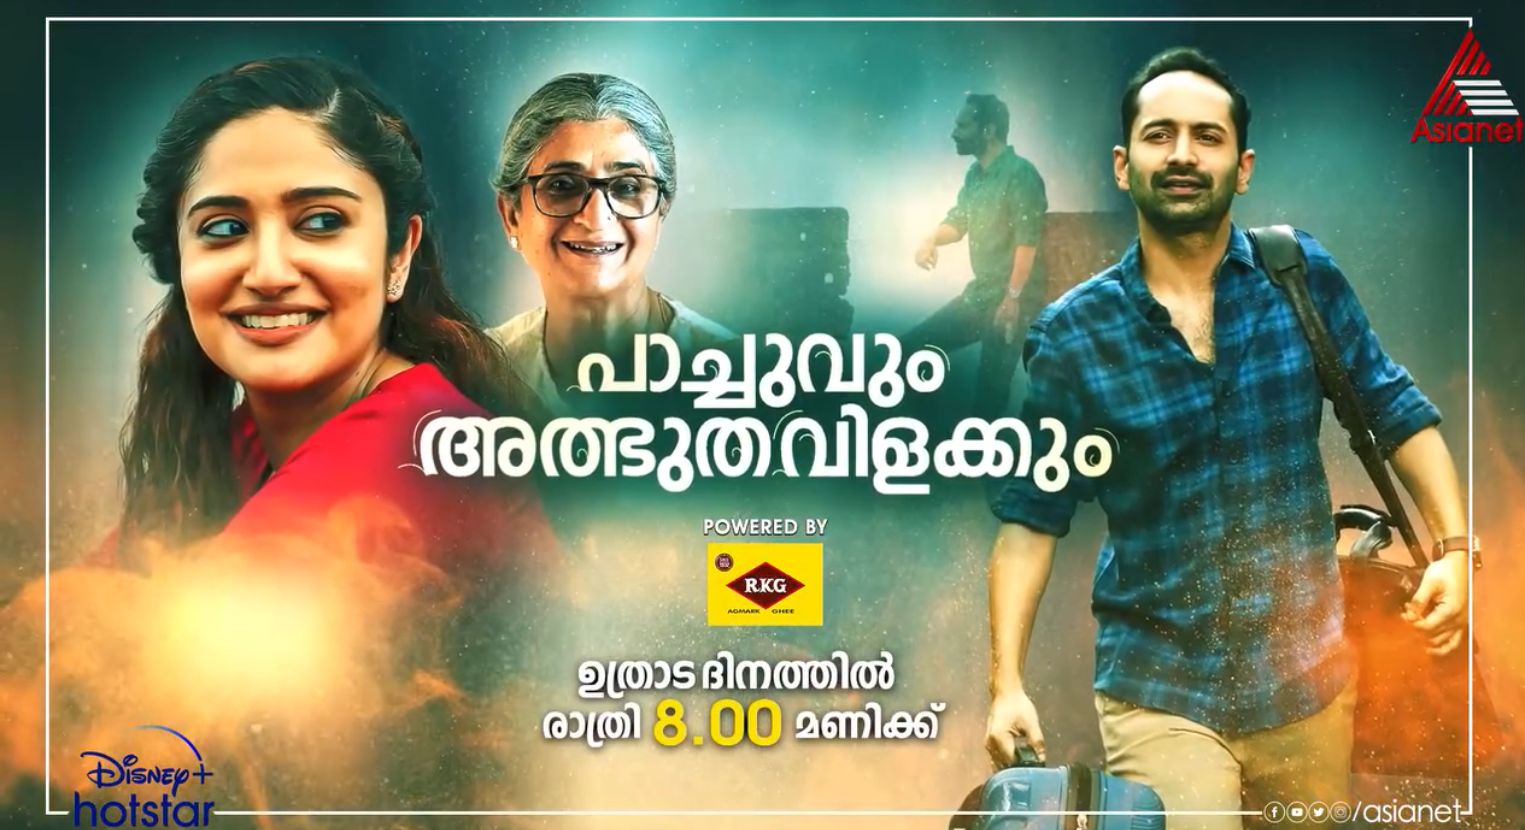 Gold Malayalam Movie Premier on Surya TV - Sunday, 12 February 2023 at 04:30 PM 1